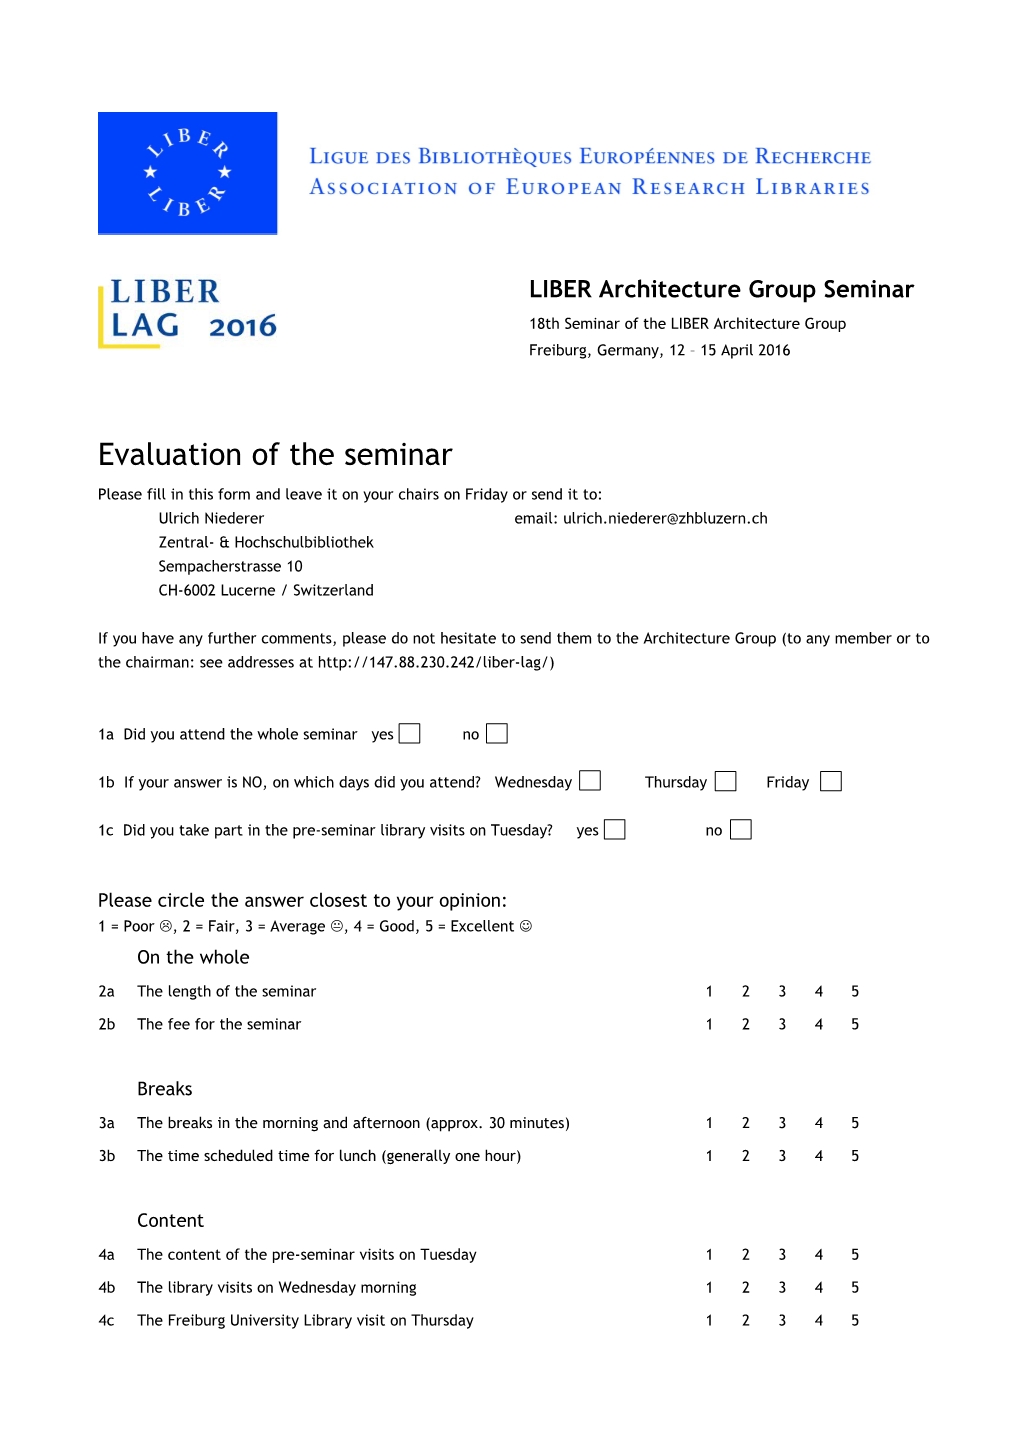 LIBER Architecture Group Seminar 2016: Evaluation 1/2